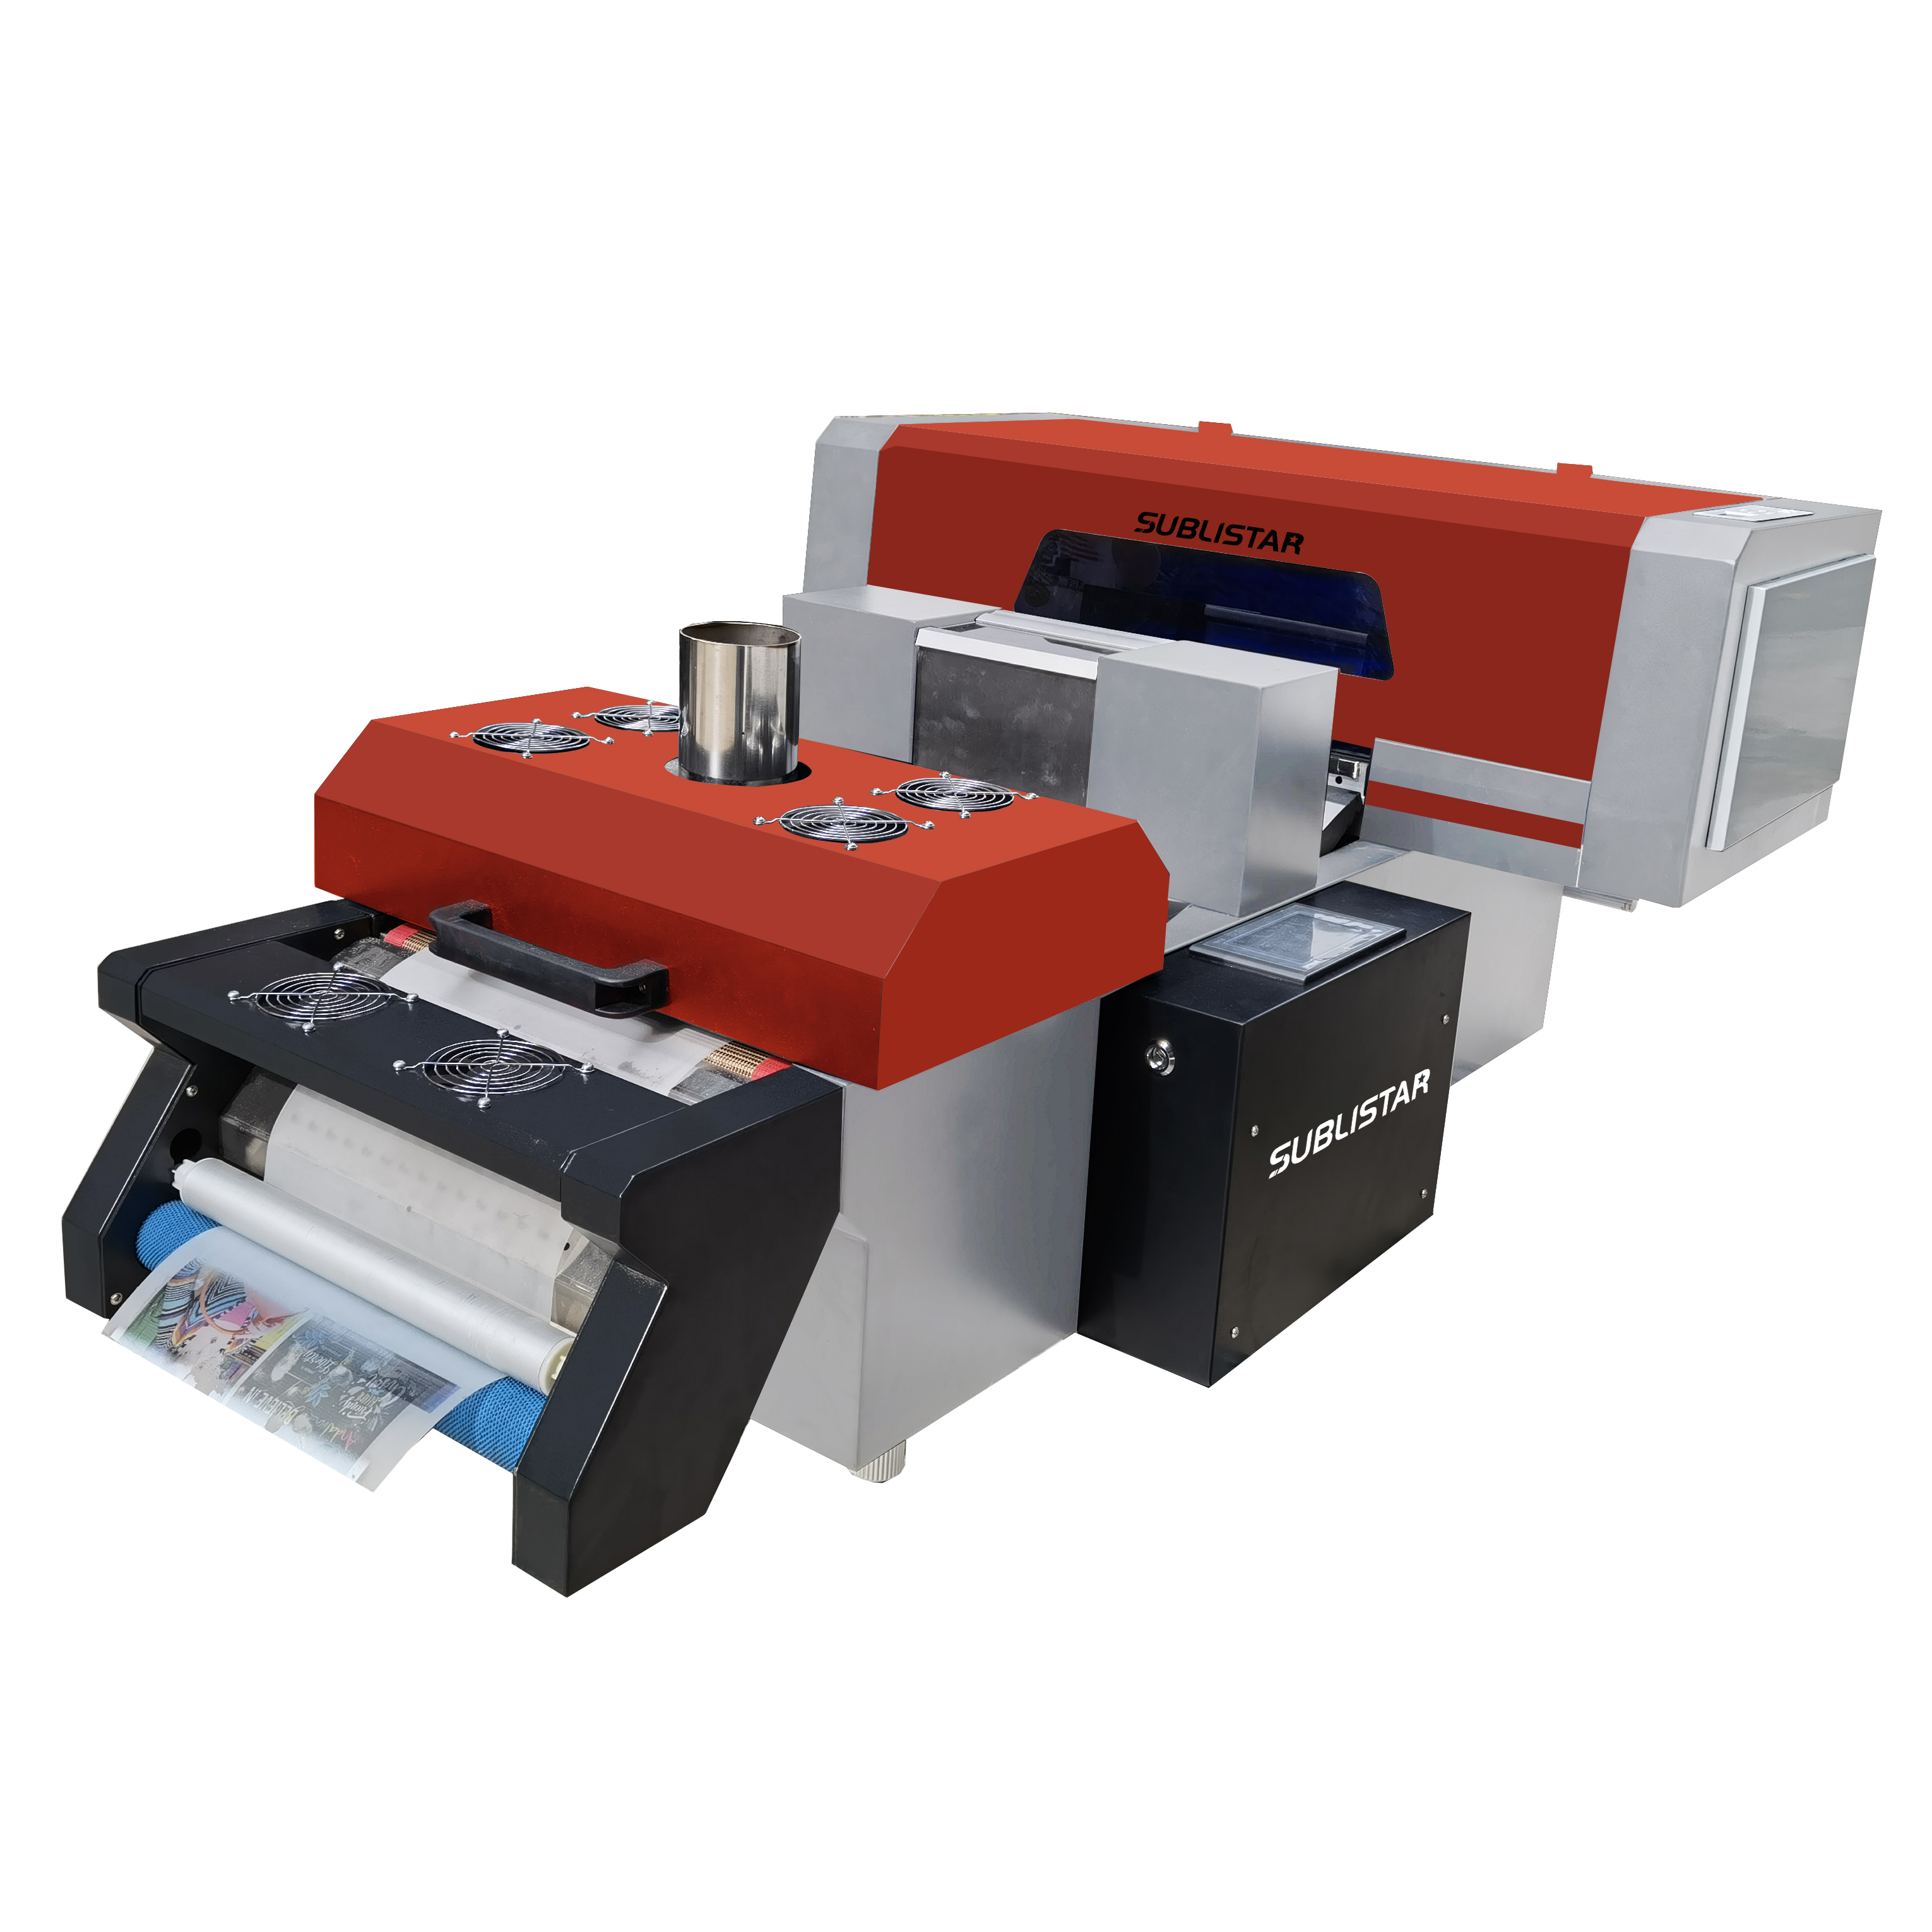 DTF 30cm PET Film Printing Printer with Dual XP600 Printheads